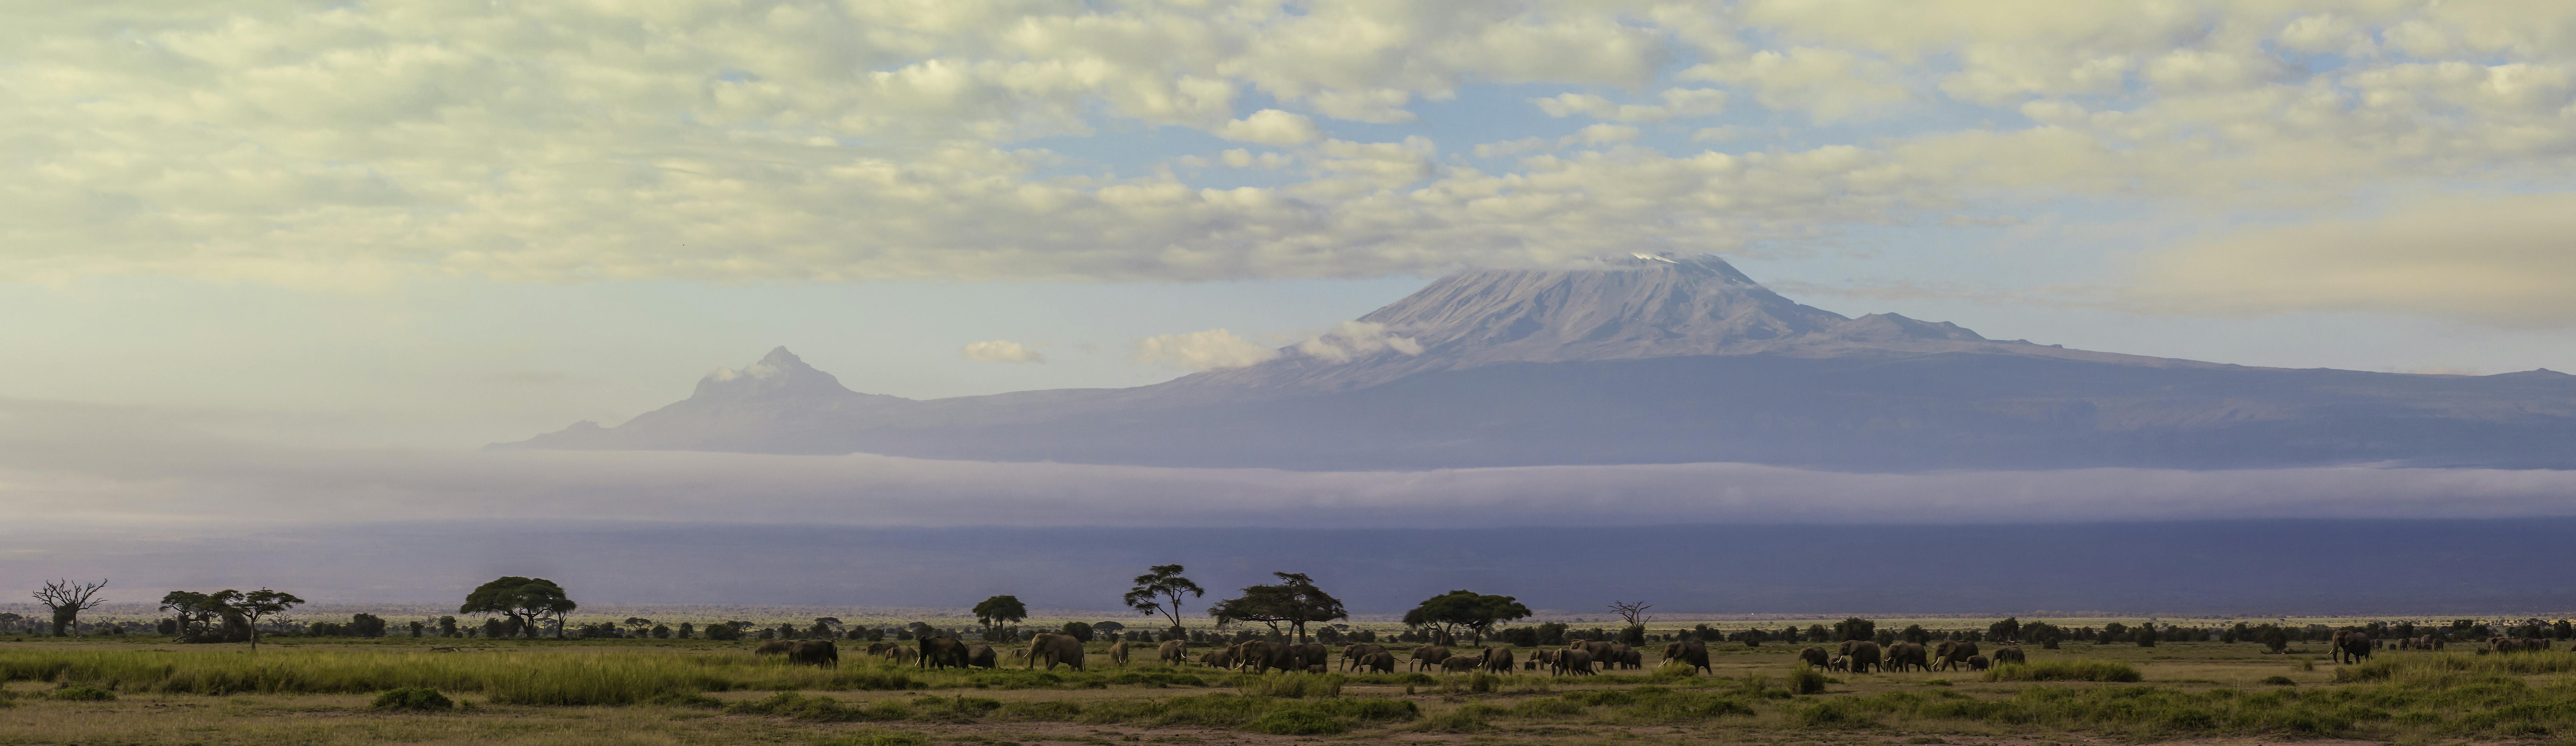 Day hike on Mount Kilimanjaro from Arusha